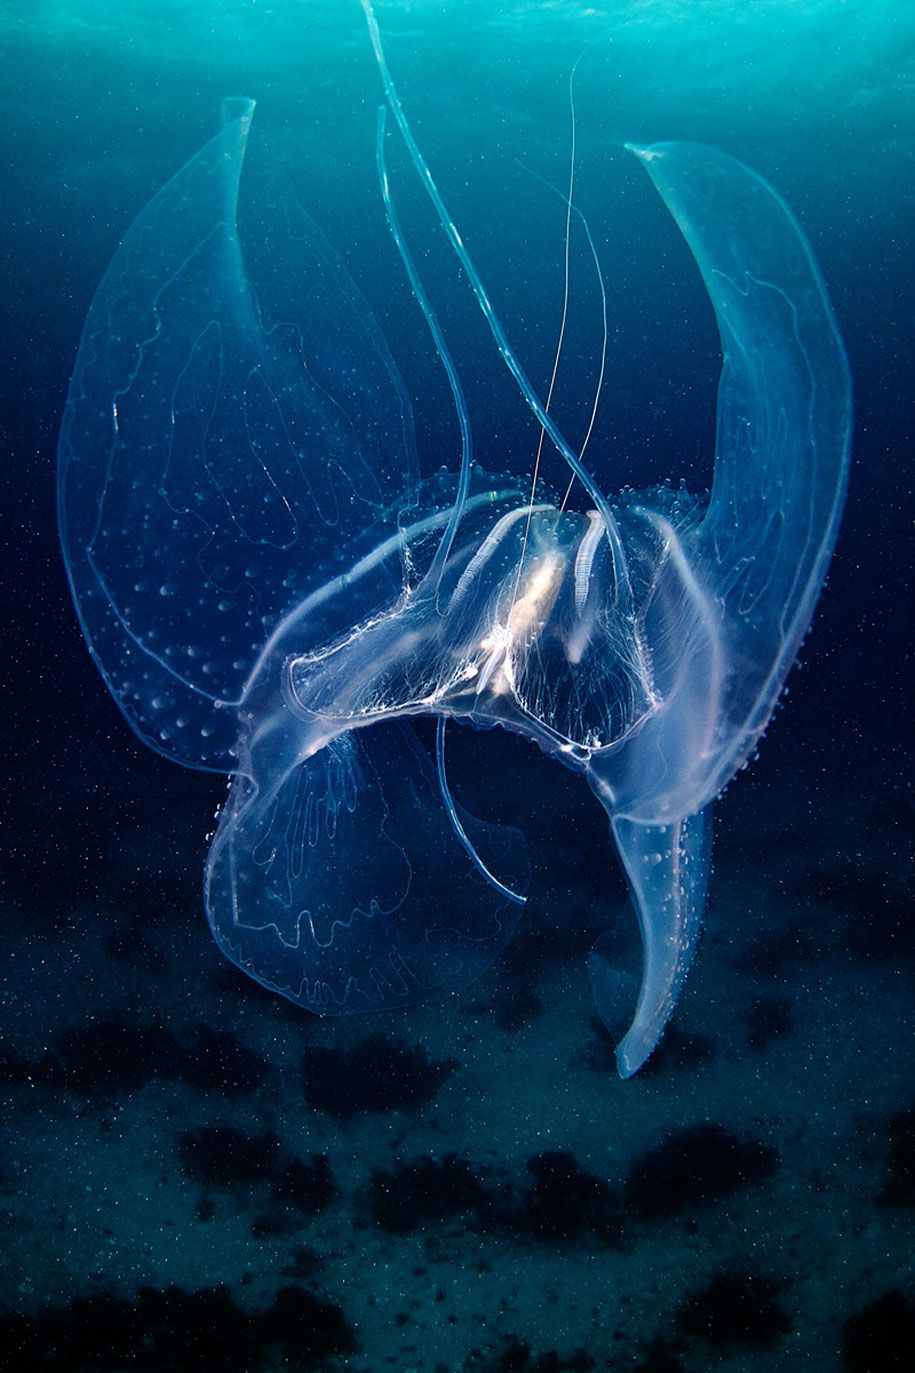 fotografia-medusa-submarina-alexander-semenov-16